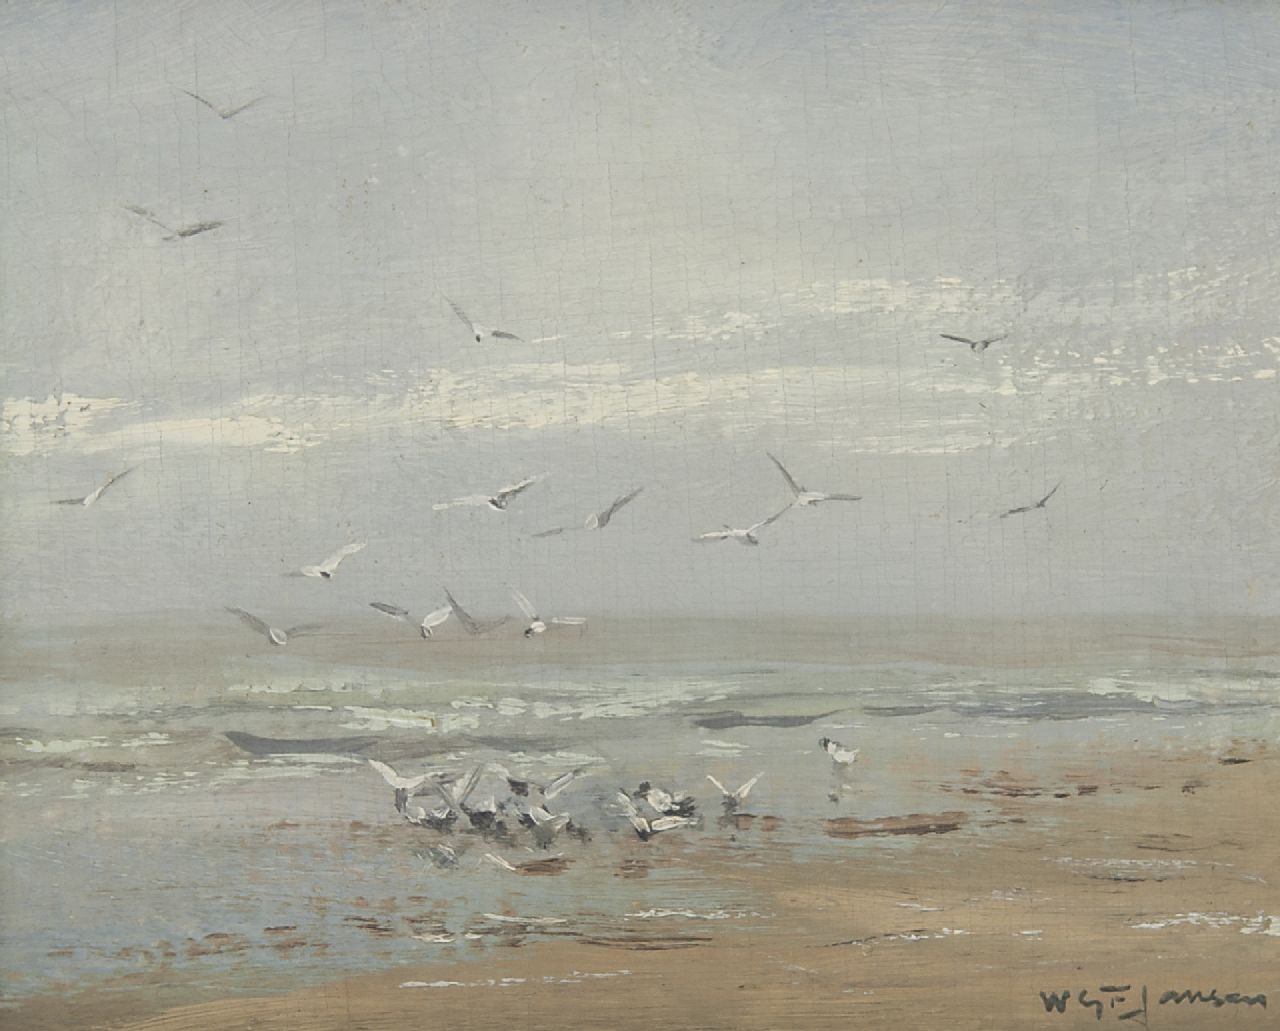 Jansen W.G.F.  | 'Willem' George Frederik Jansen, Meeuwen op het strand, olieverf op doek 19,5 x 26,0 cm, gesigneerd rechtsonder